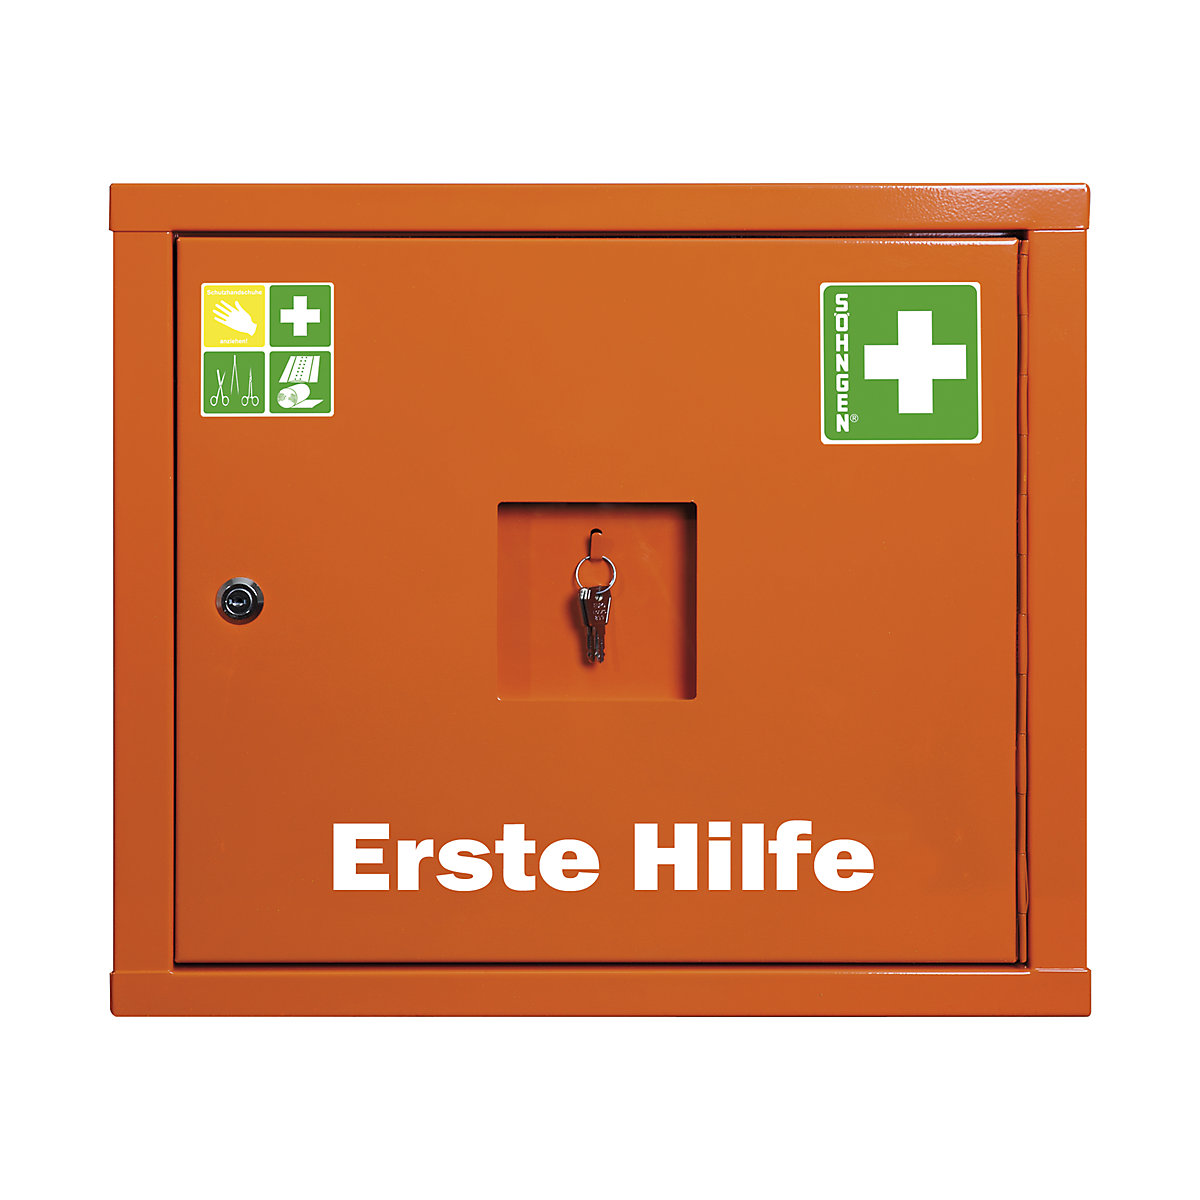 SÖHNGEN – First aid cupboard, DIN 13157